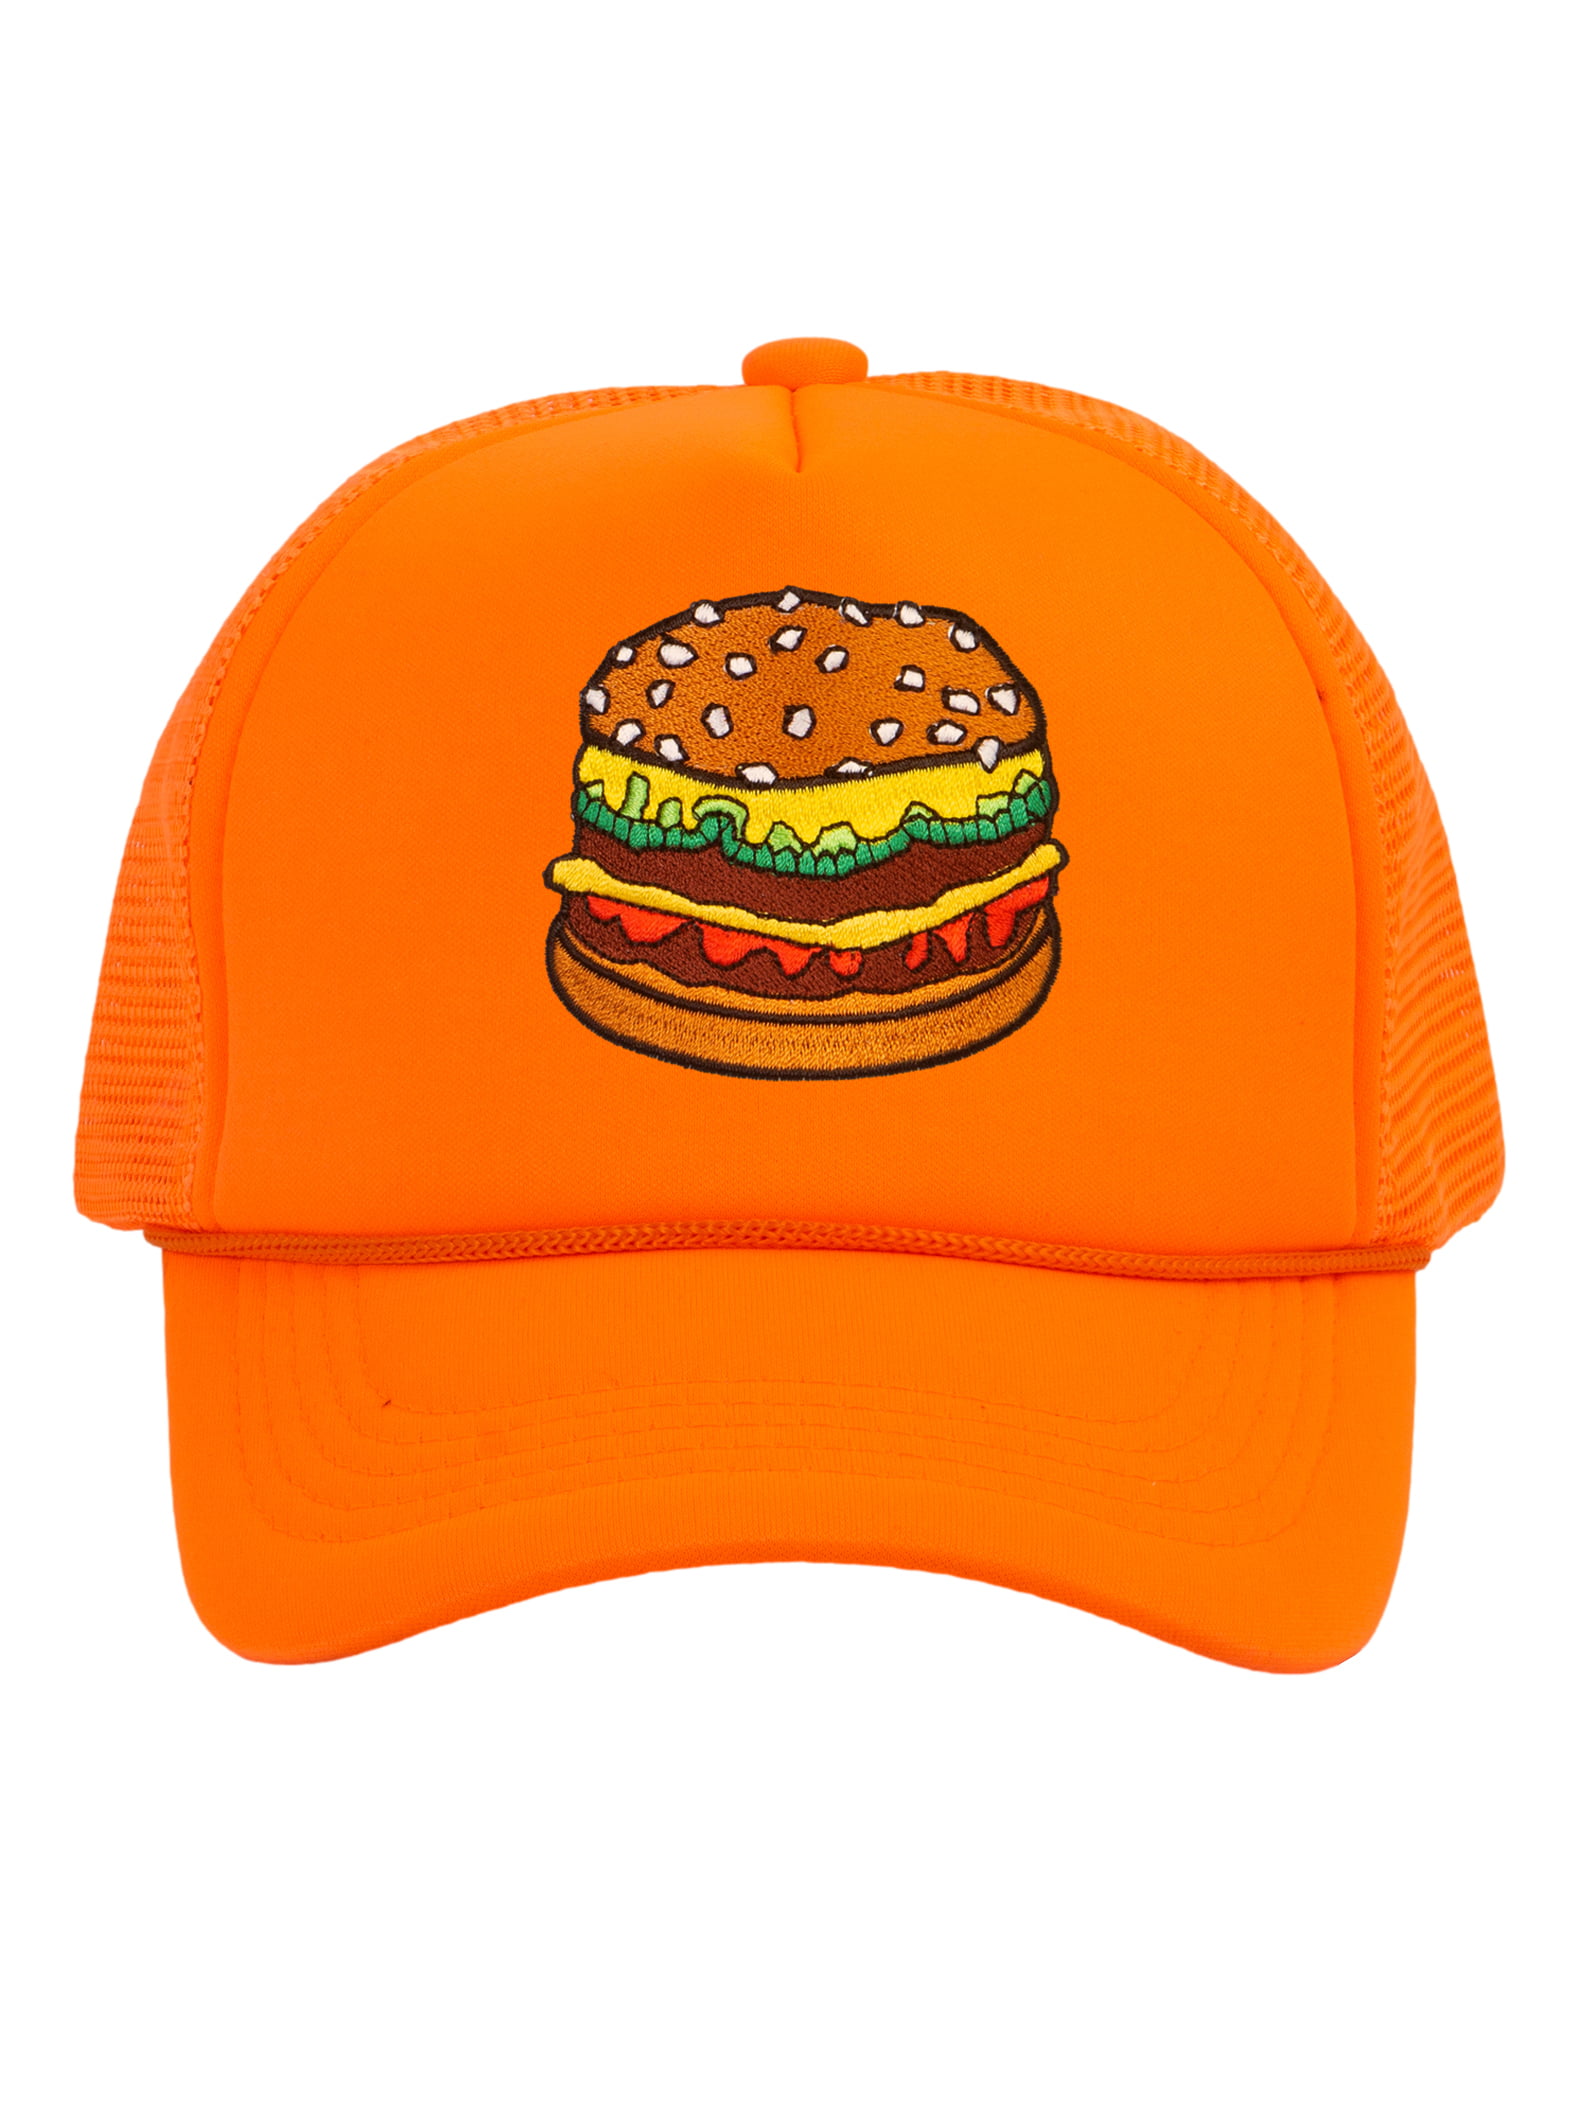 Top Headwear Hamburger Cheeseburger Trucker Hat - Men's